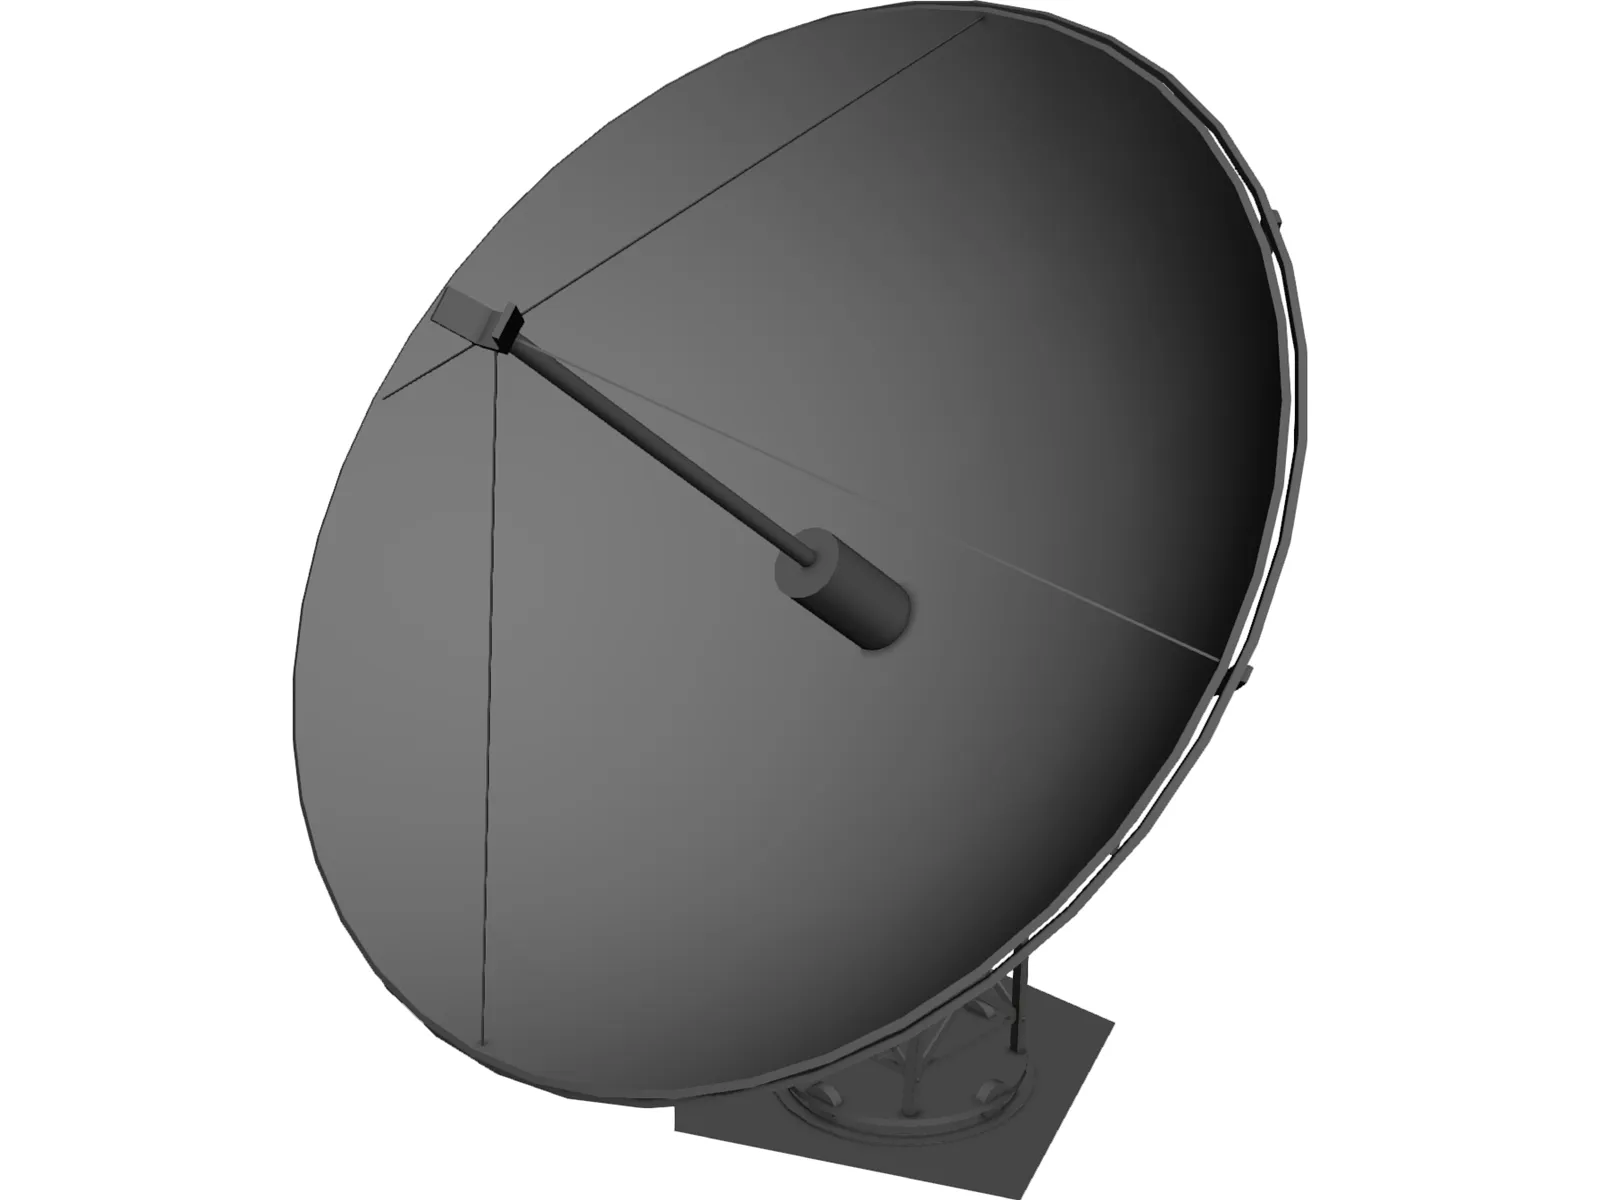 Satellite Dish 3D Model